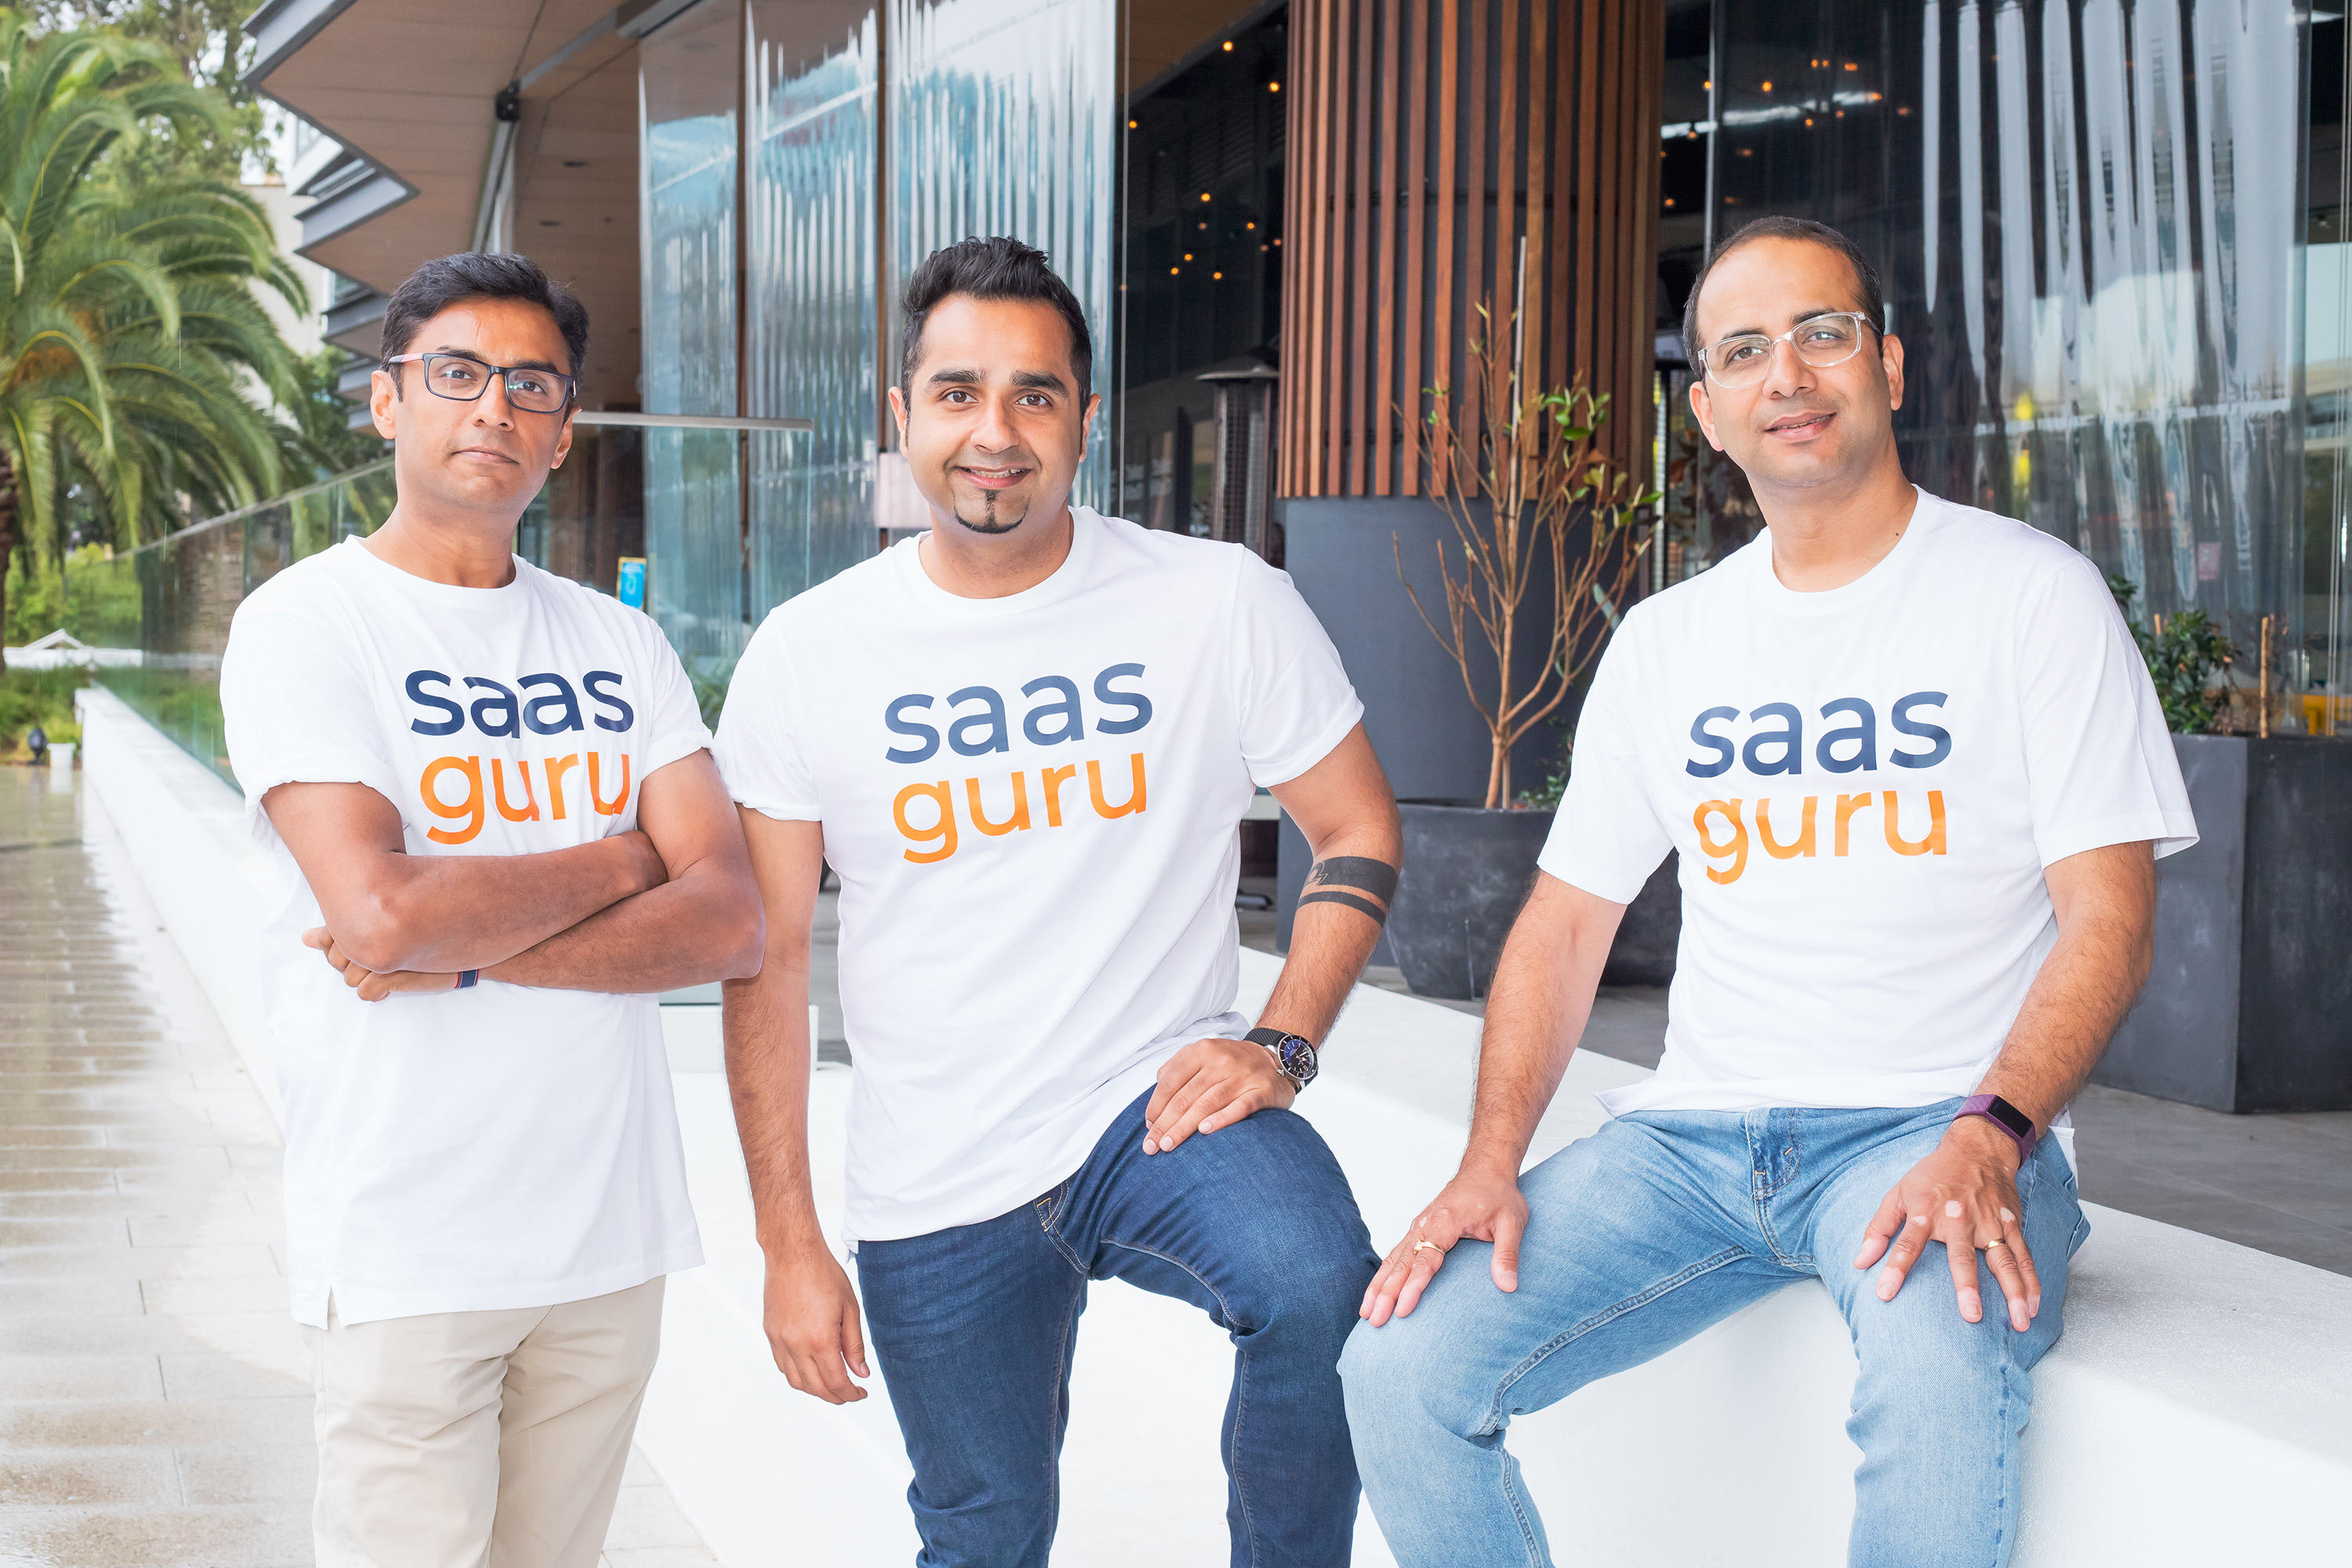 Saasguru founders Atif Saad, Amit Choudhary and Prateek Kataria